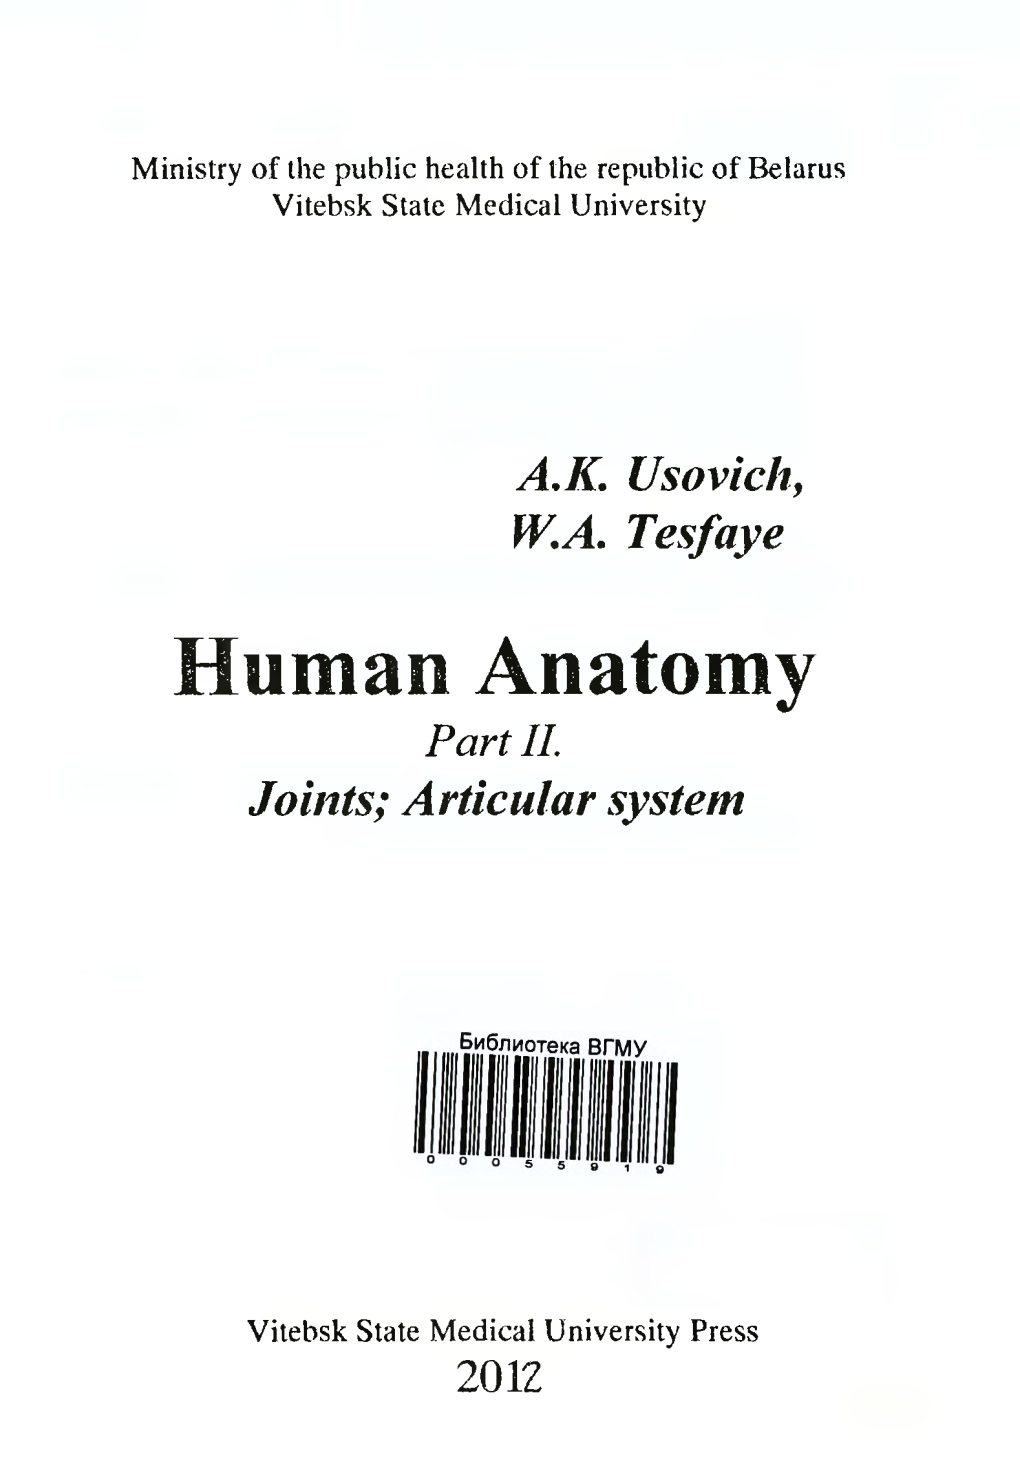 Human Anatomy Partii